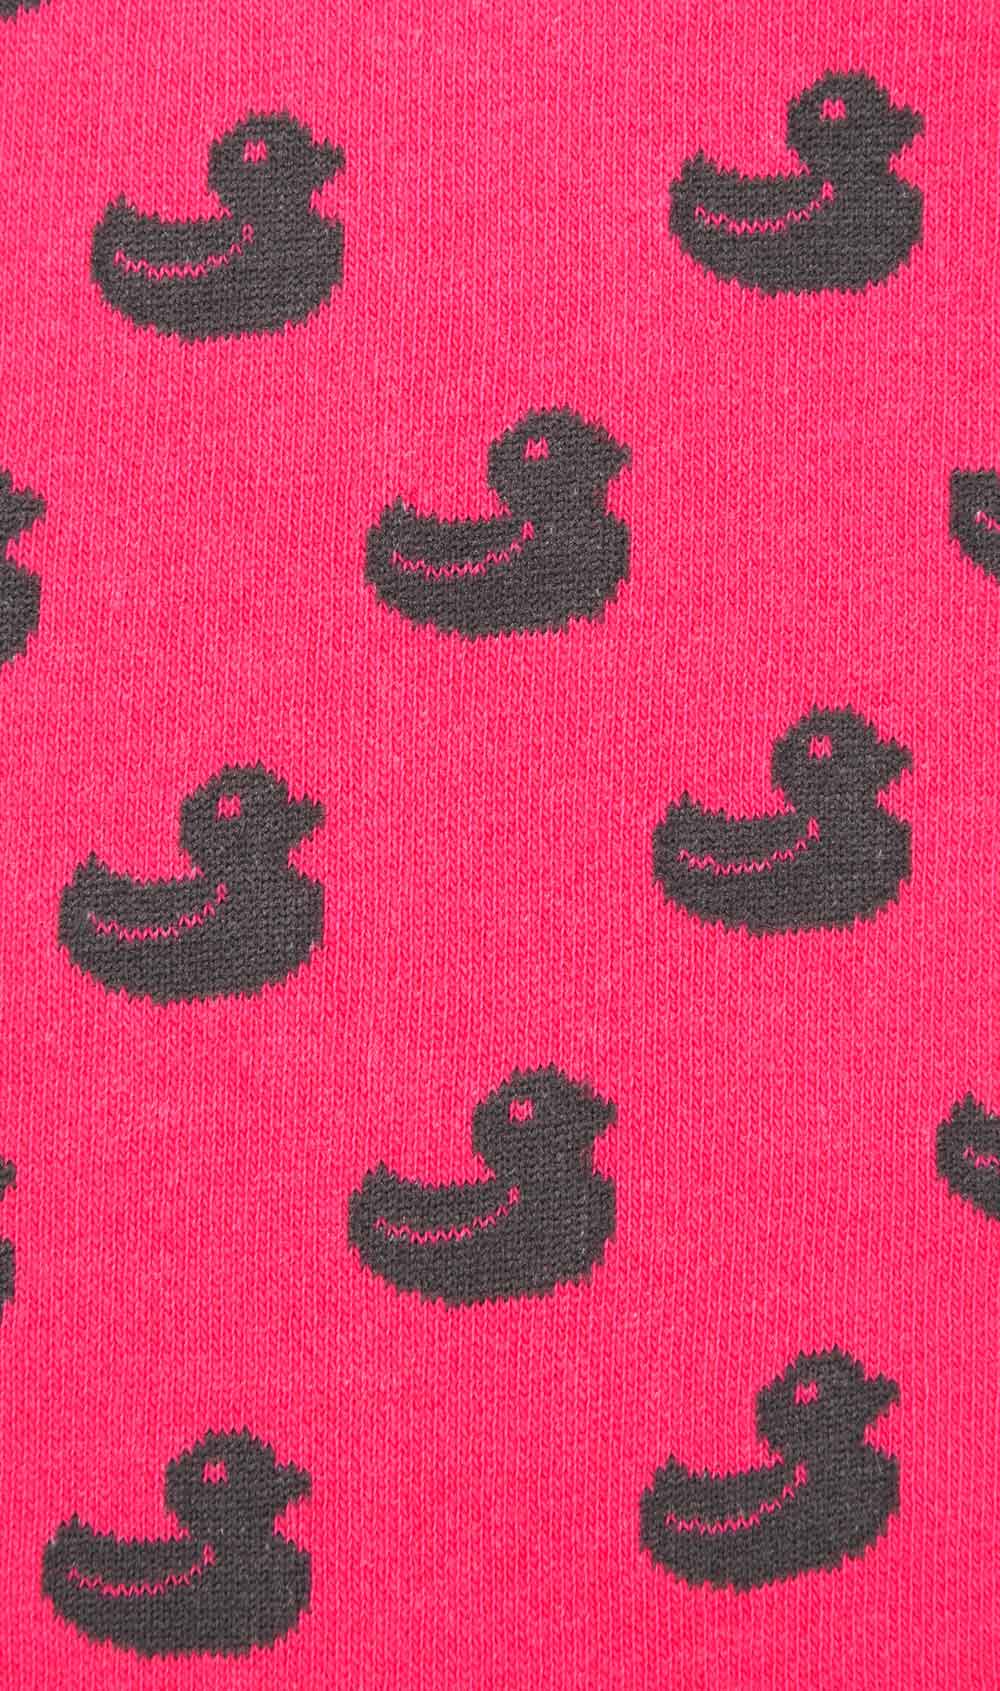 Hot Pink Duckling Socks Fabric